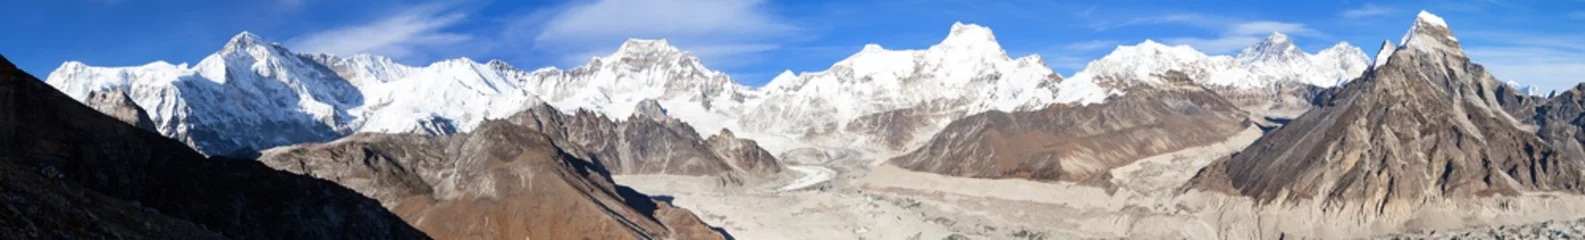 Store enrouleur tamisant Cho Oyu mount Everest and Lhotse, Nepal Himalayas mountains